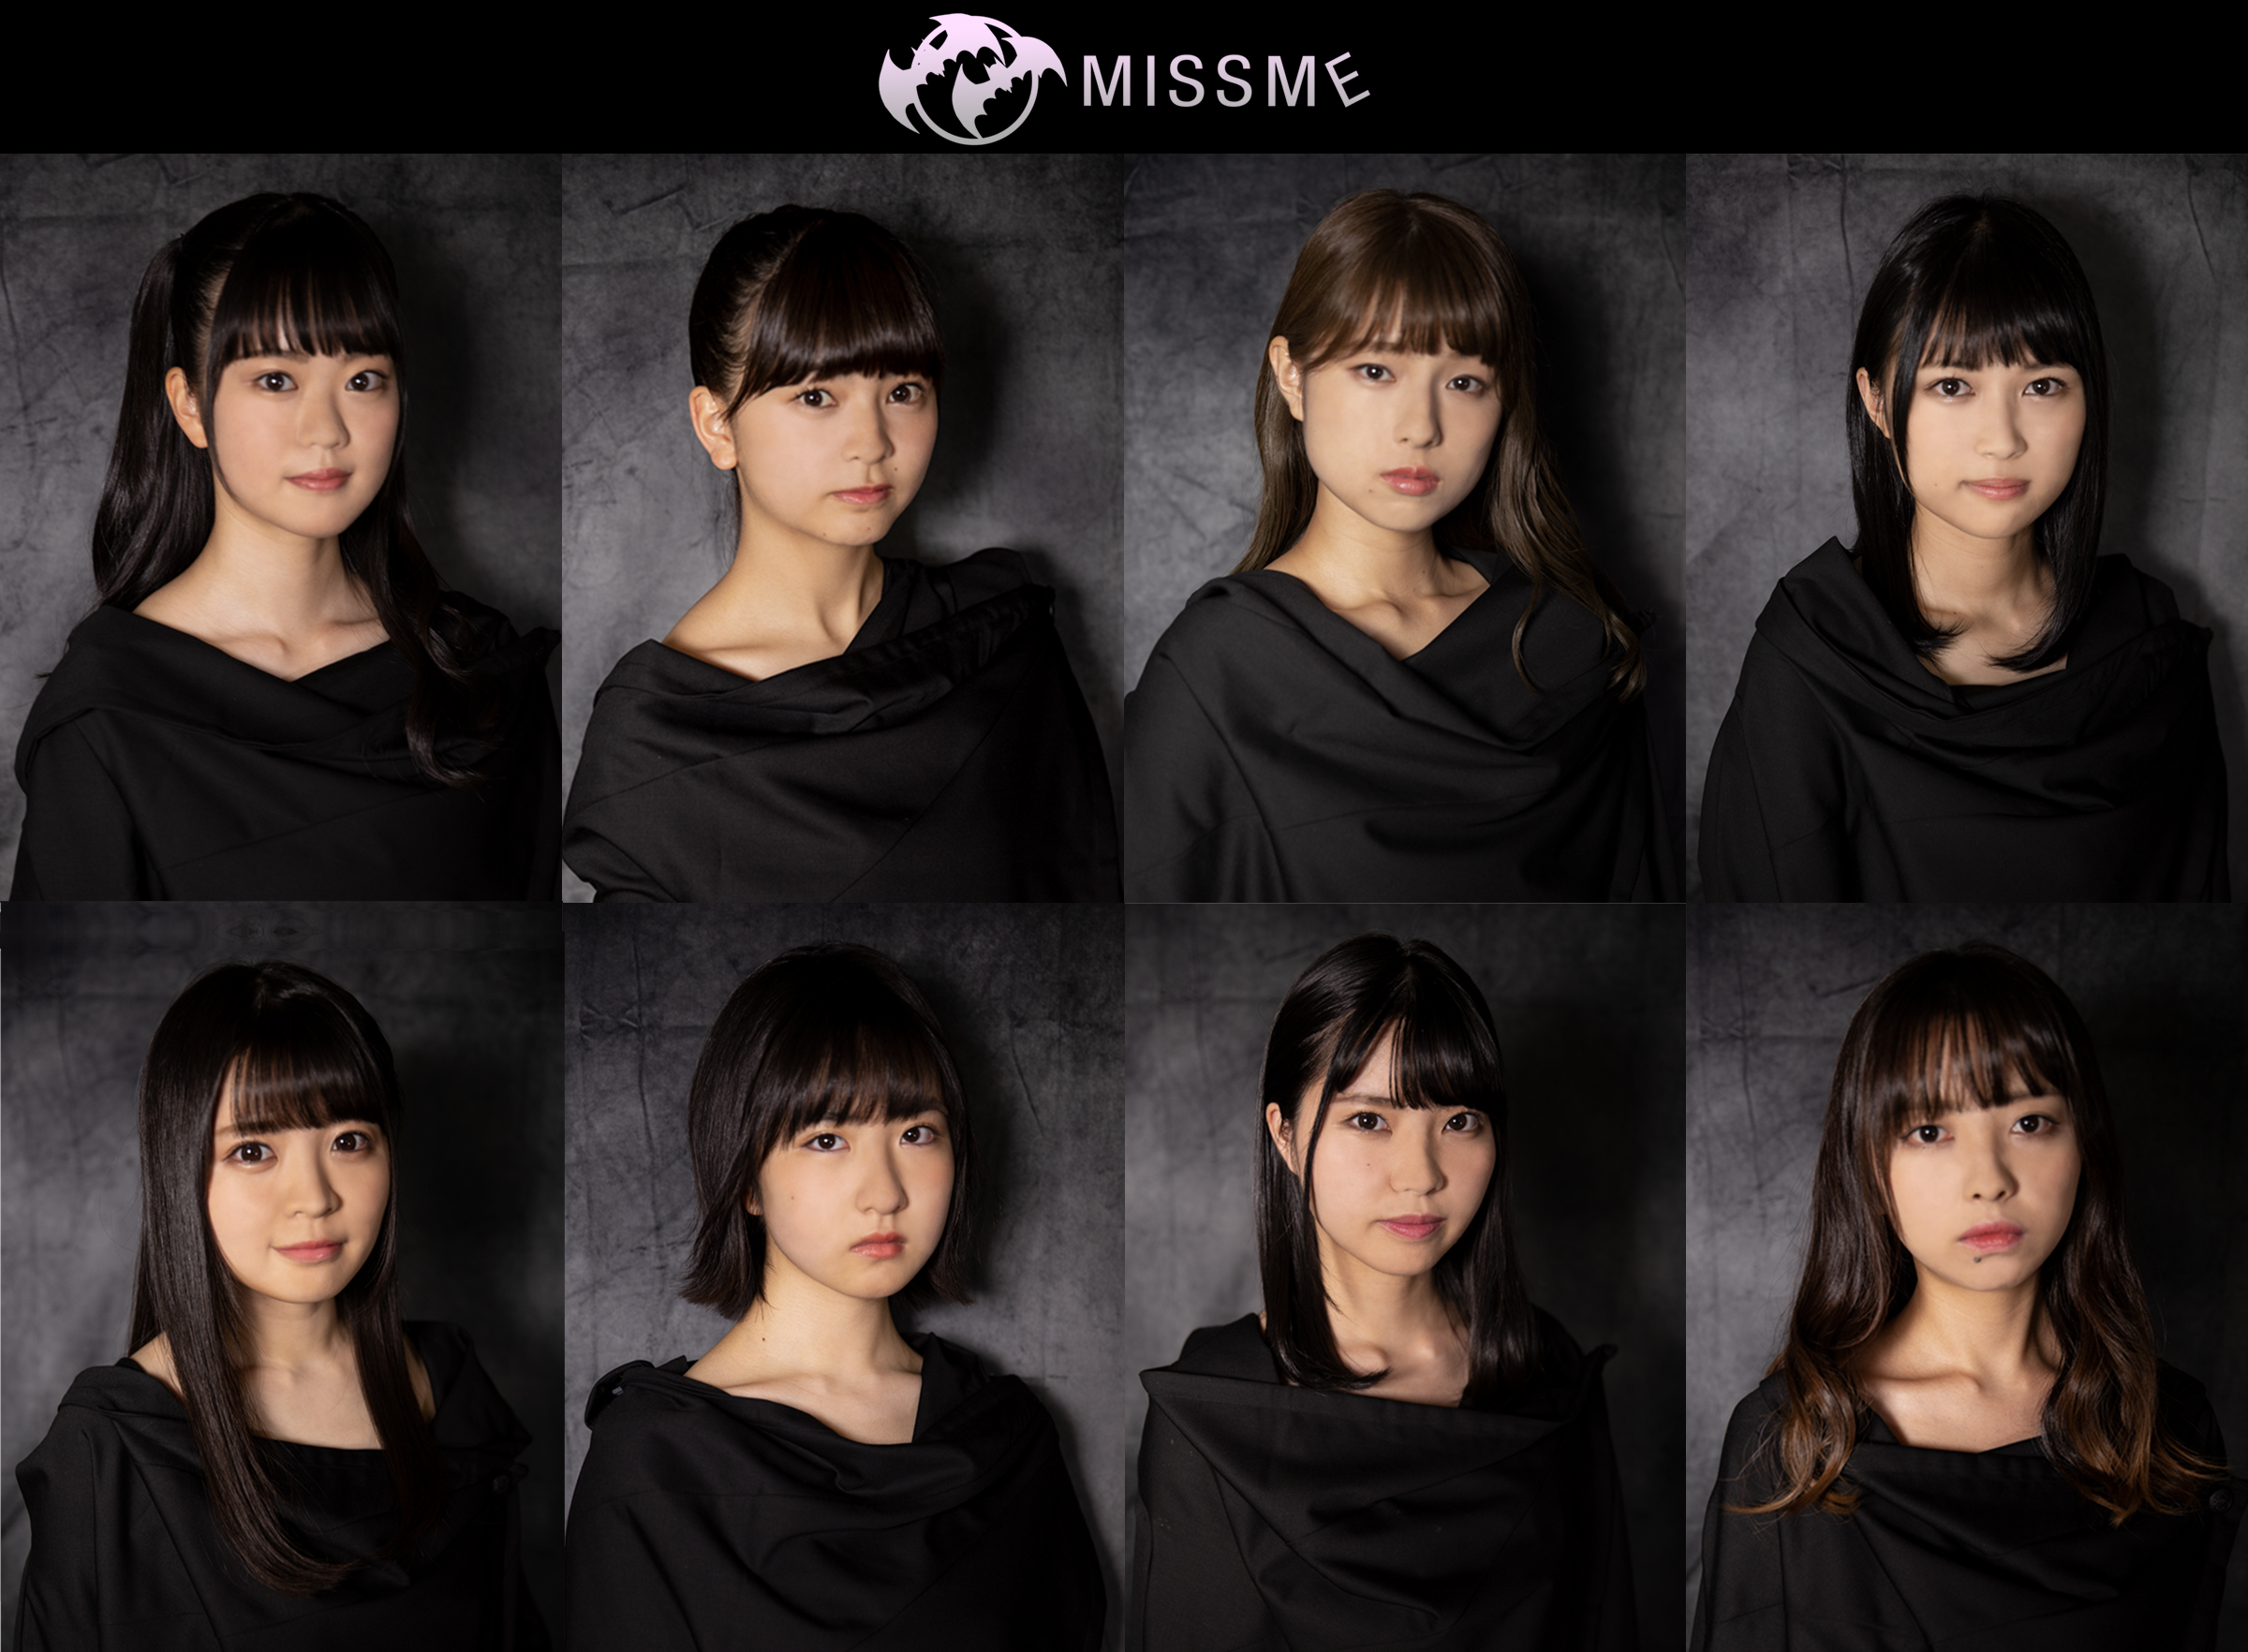 Hisashi Kondo X Yoani Rock Idolユニット Miss Me 始動 代々木アニメーション学院のプレスリリース